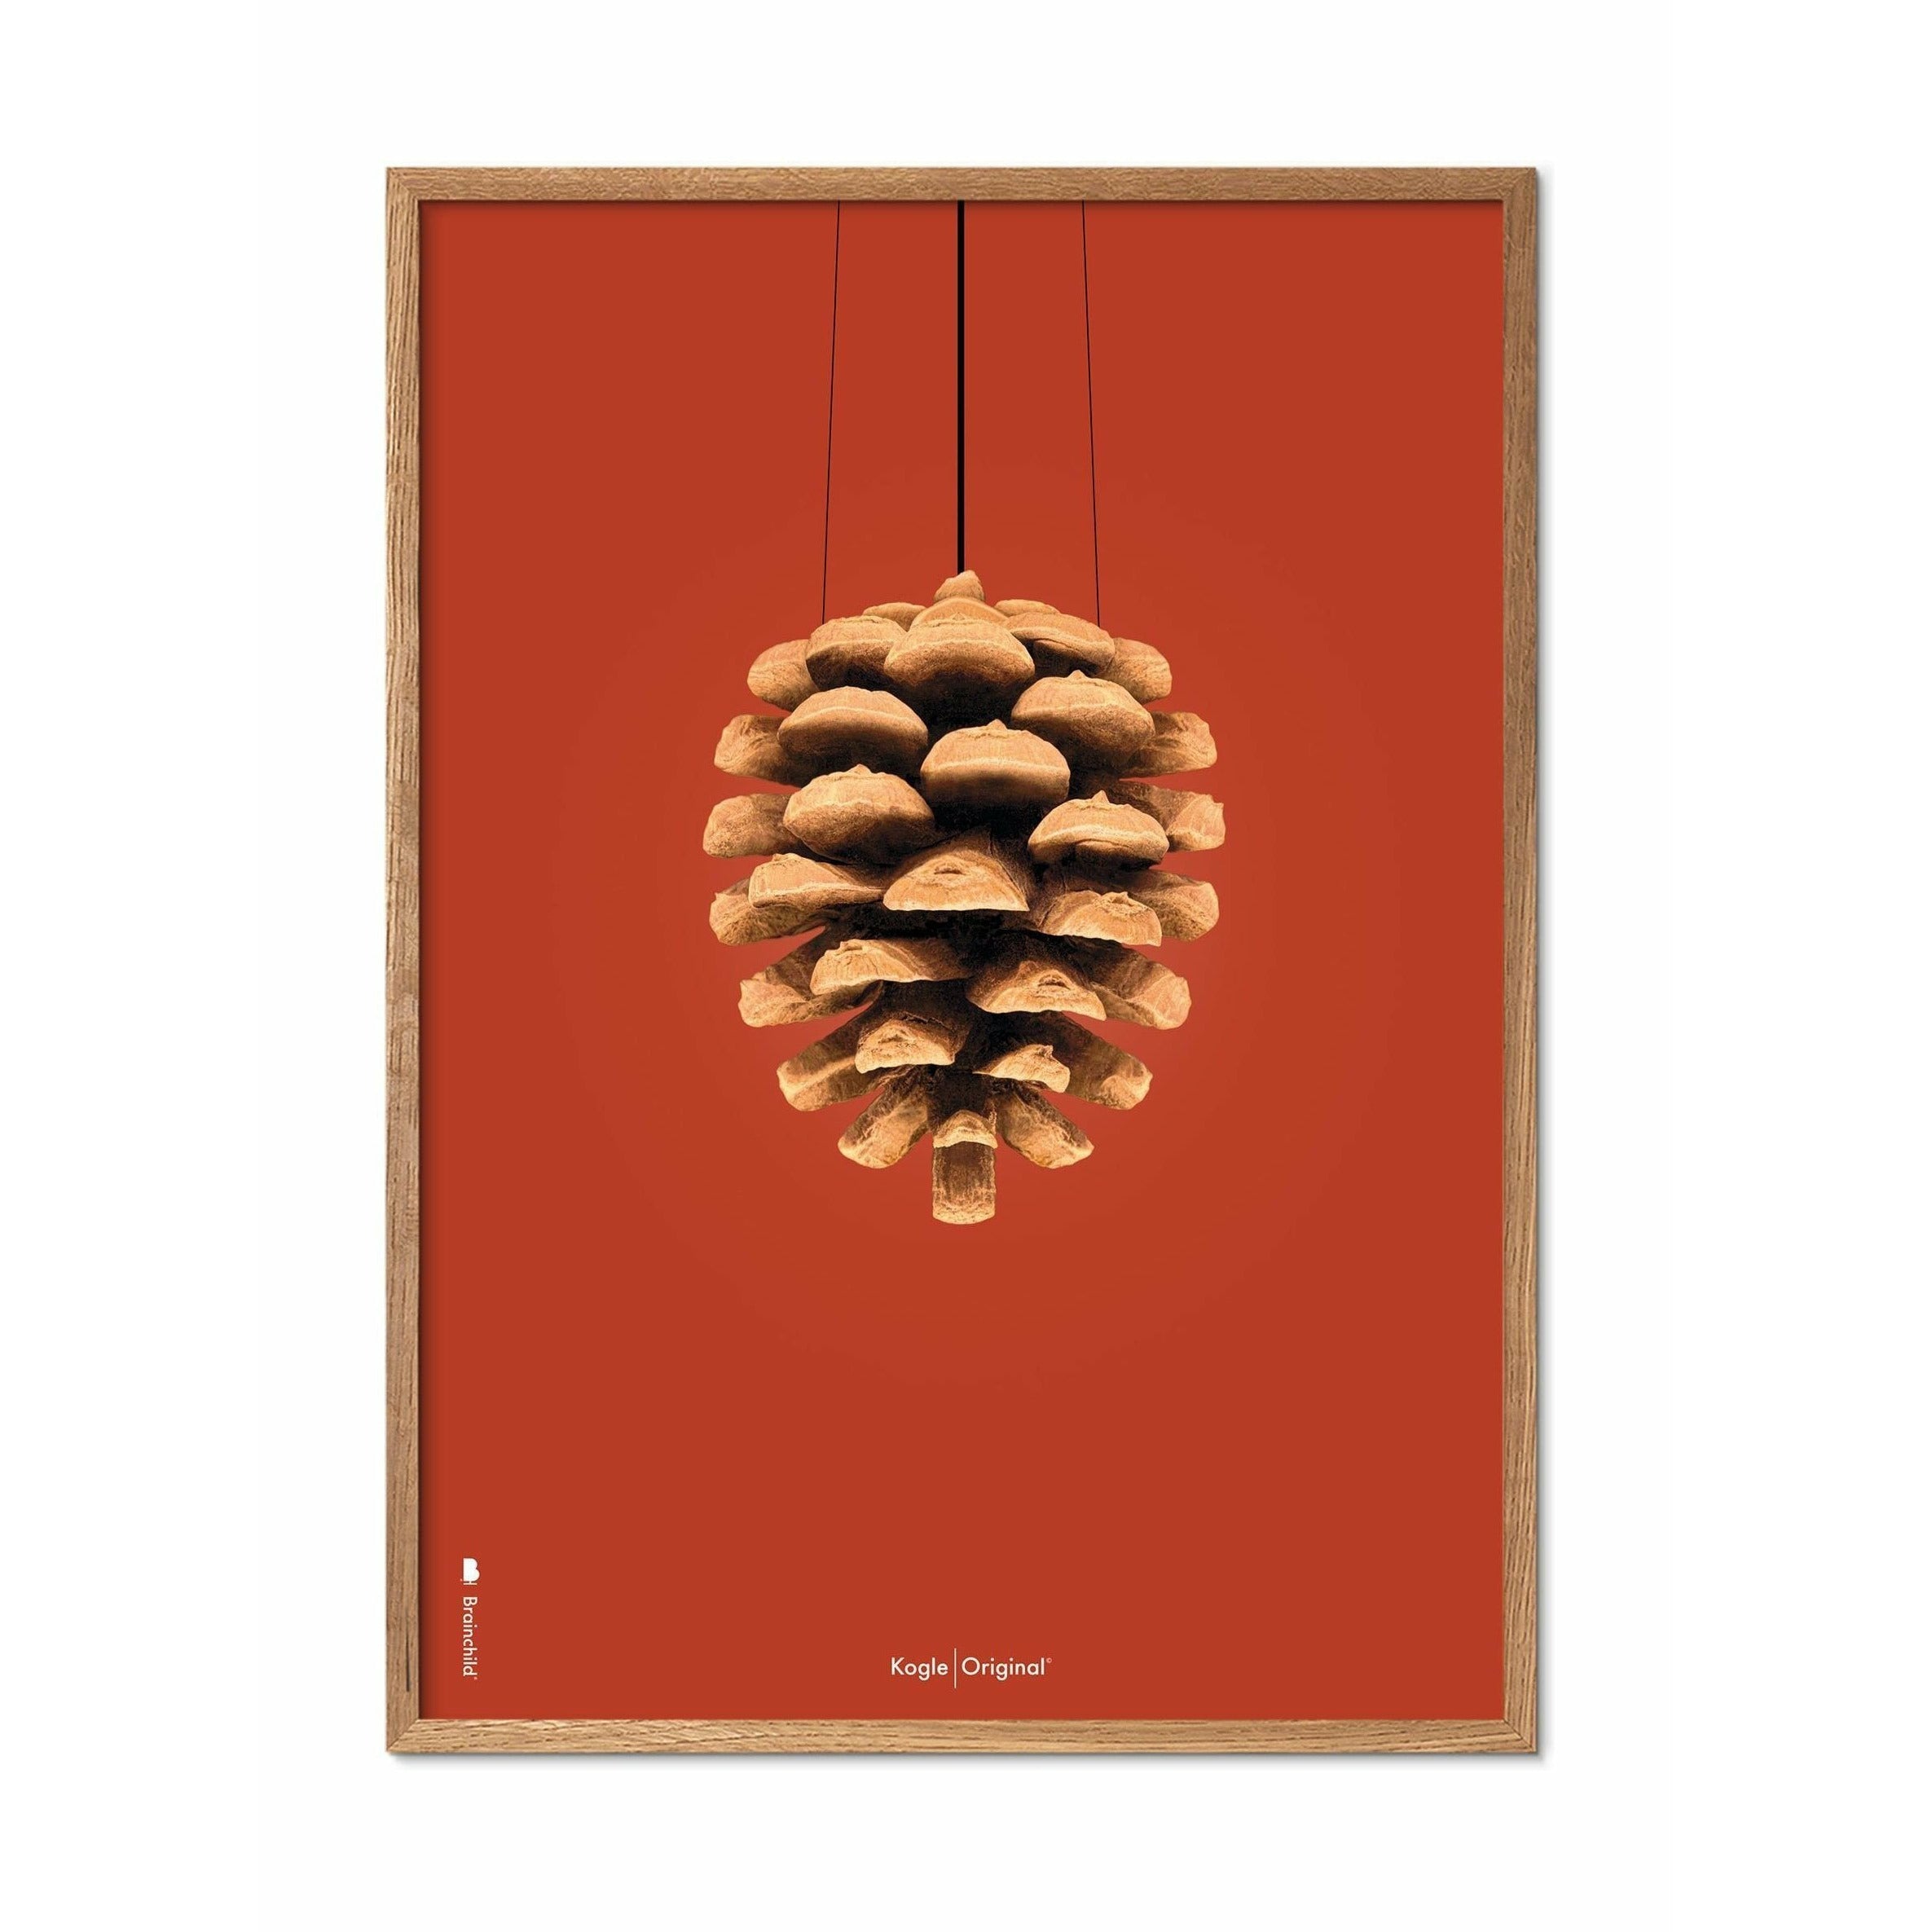 Brainchild Kogle Klassisk Plakat, Ramme I Lyst Træ 50X70 Cm, Rød Baggrund